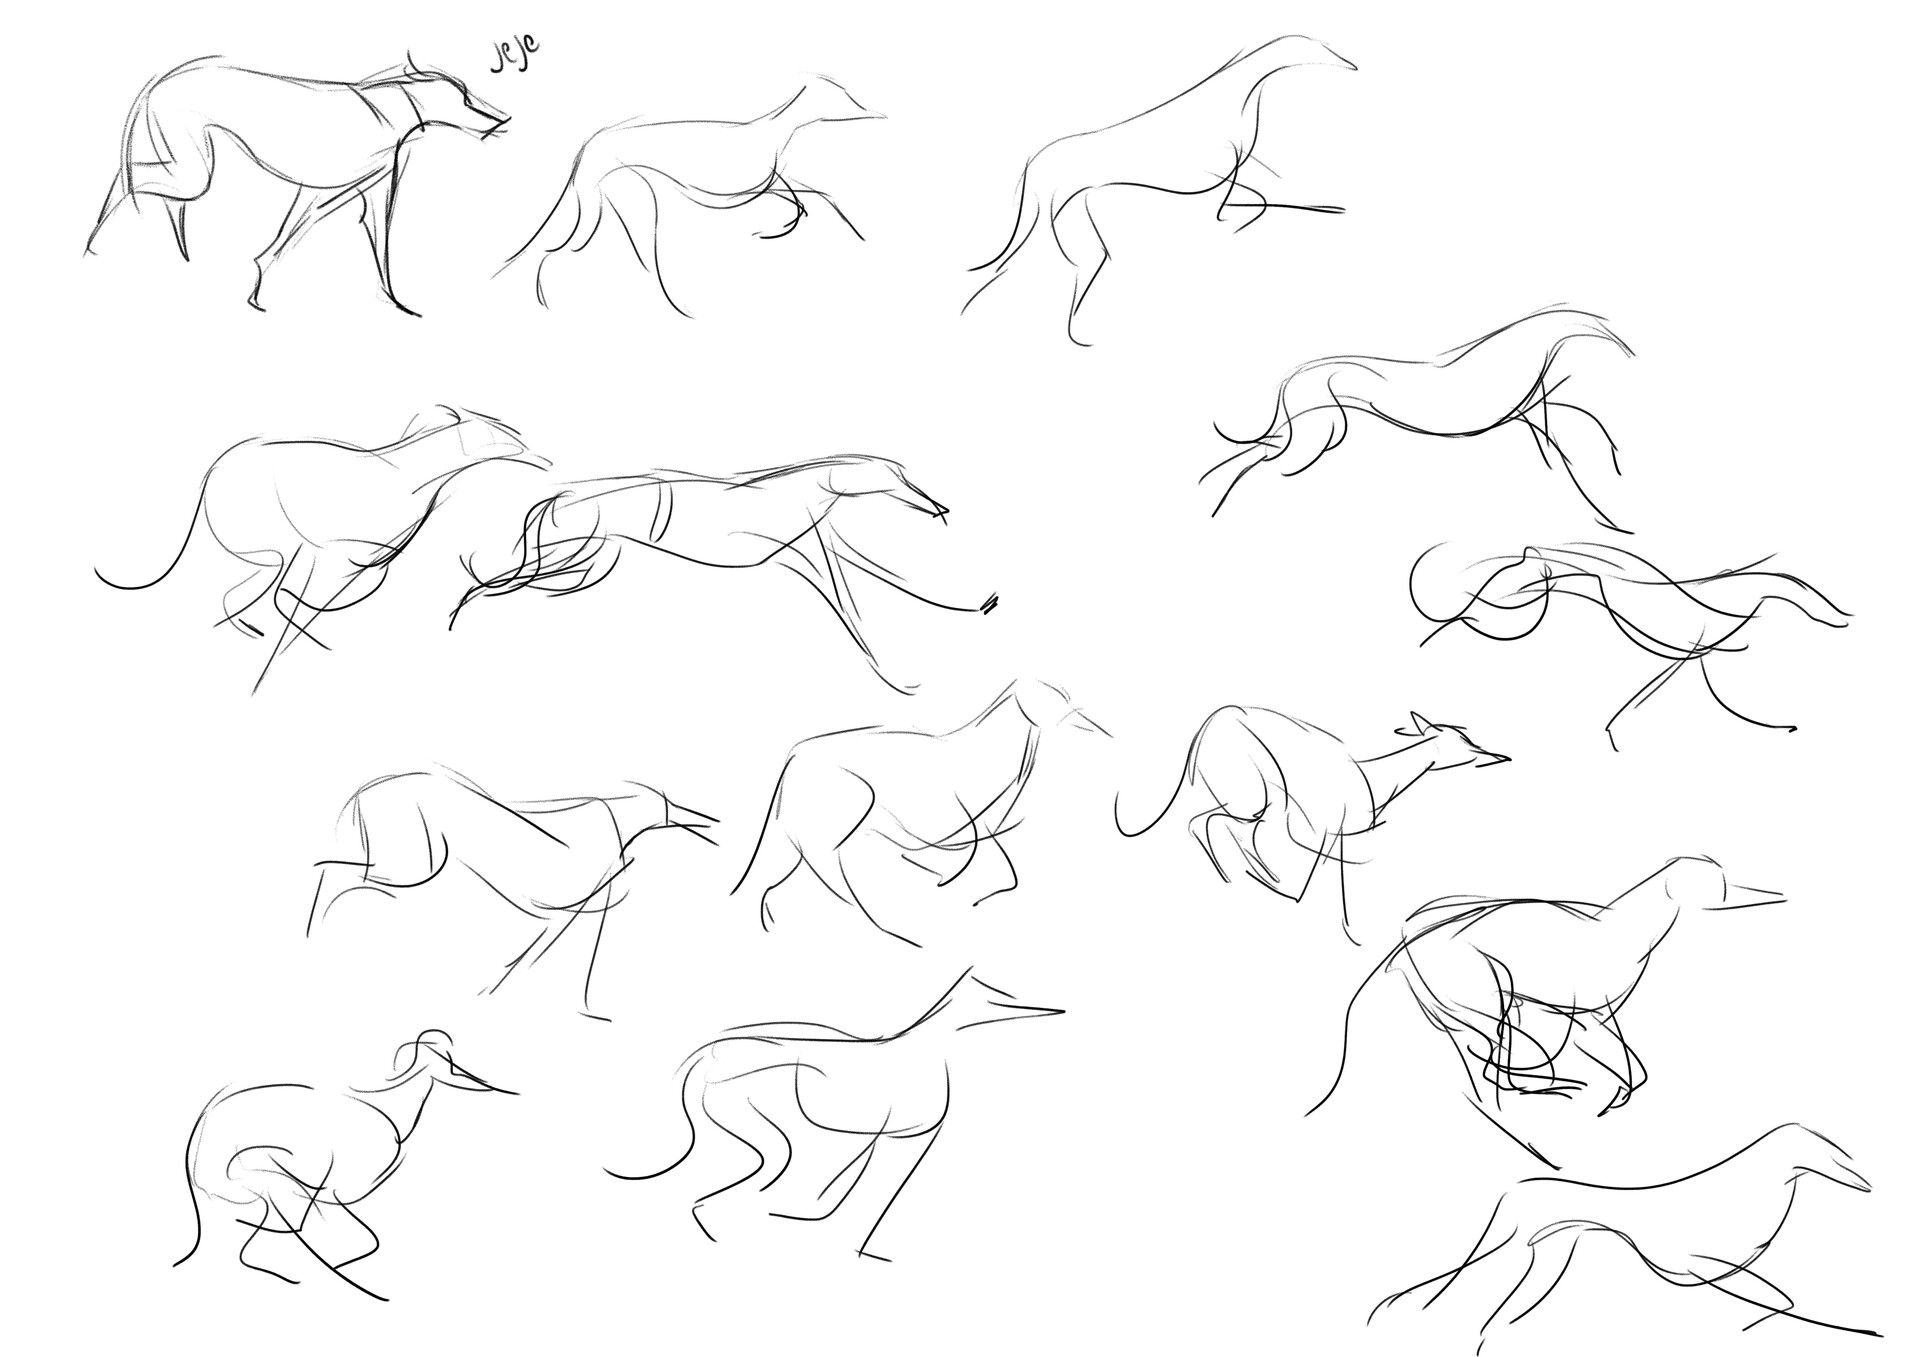 ArtStation - Dog Running - Gesture Drawing